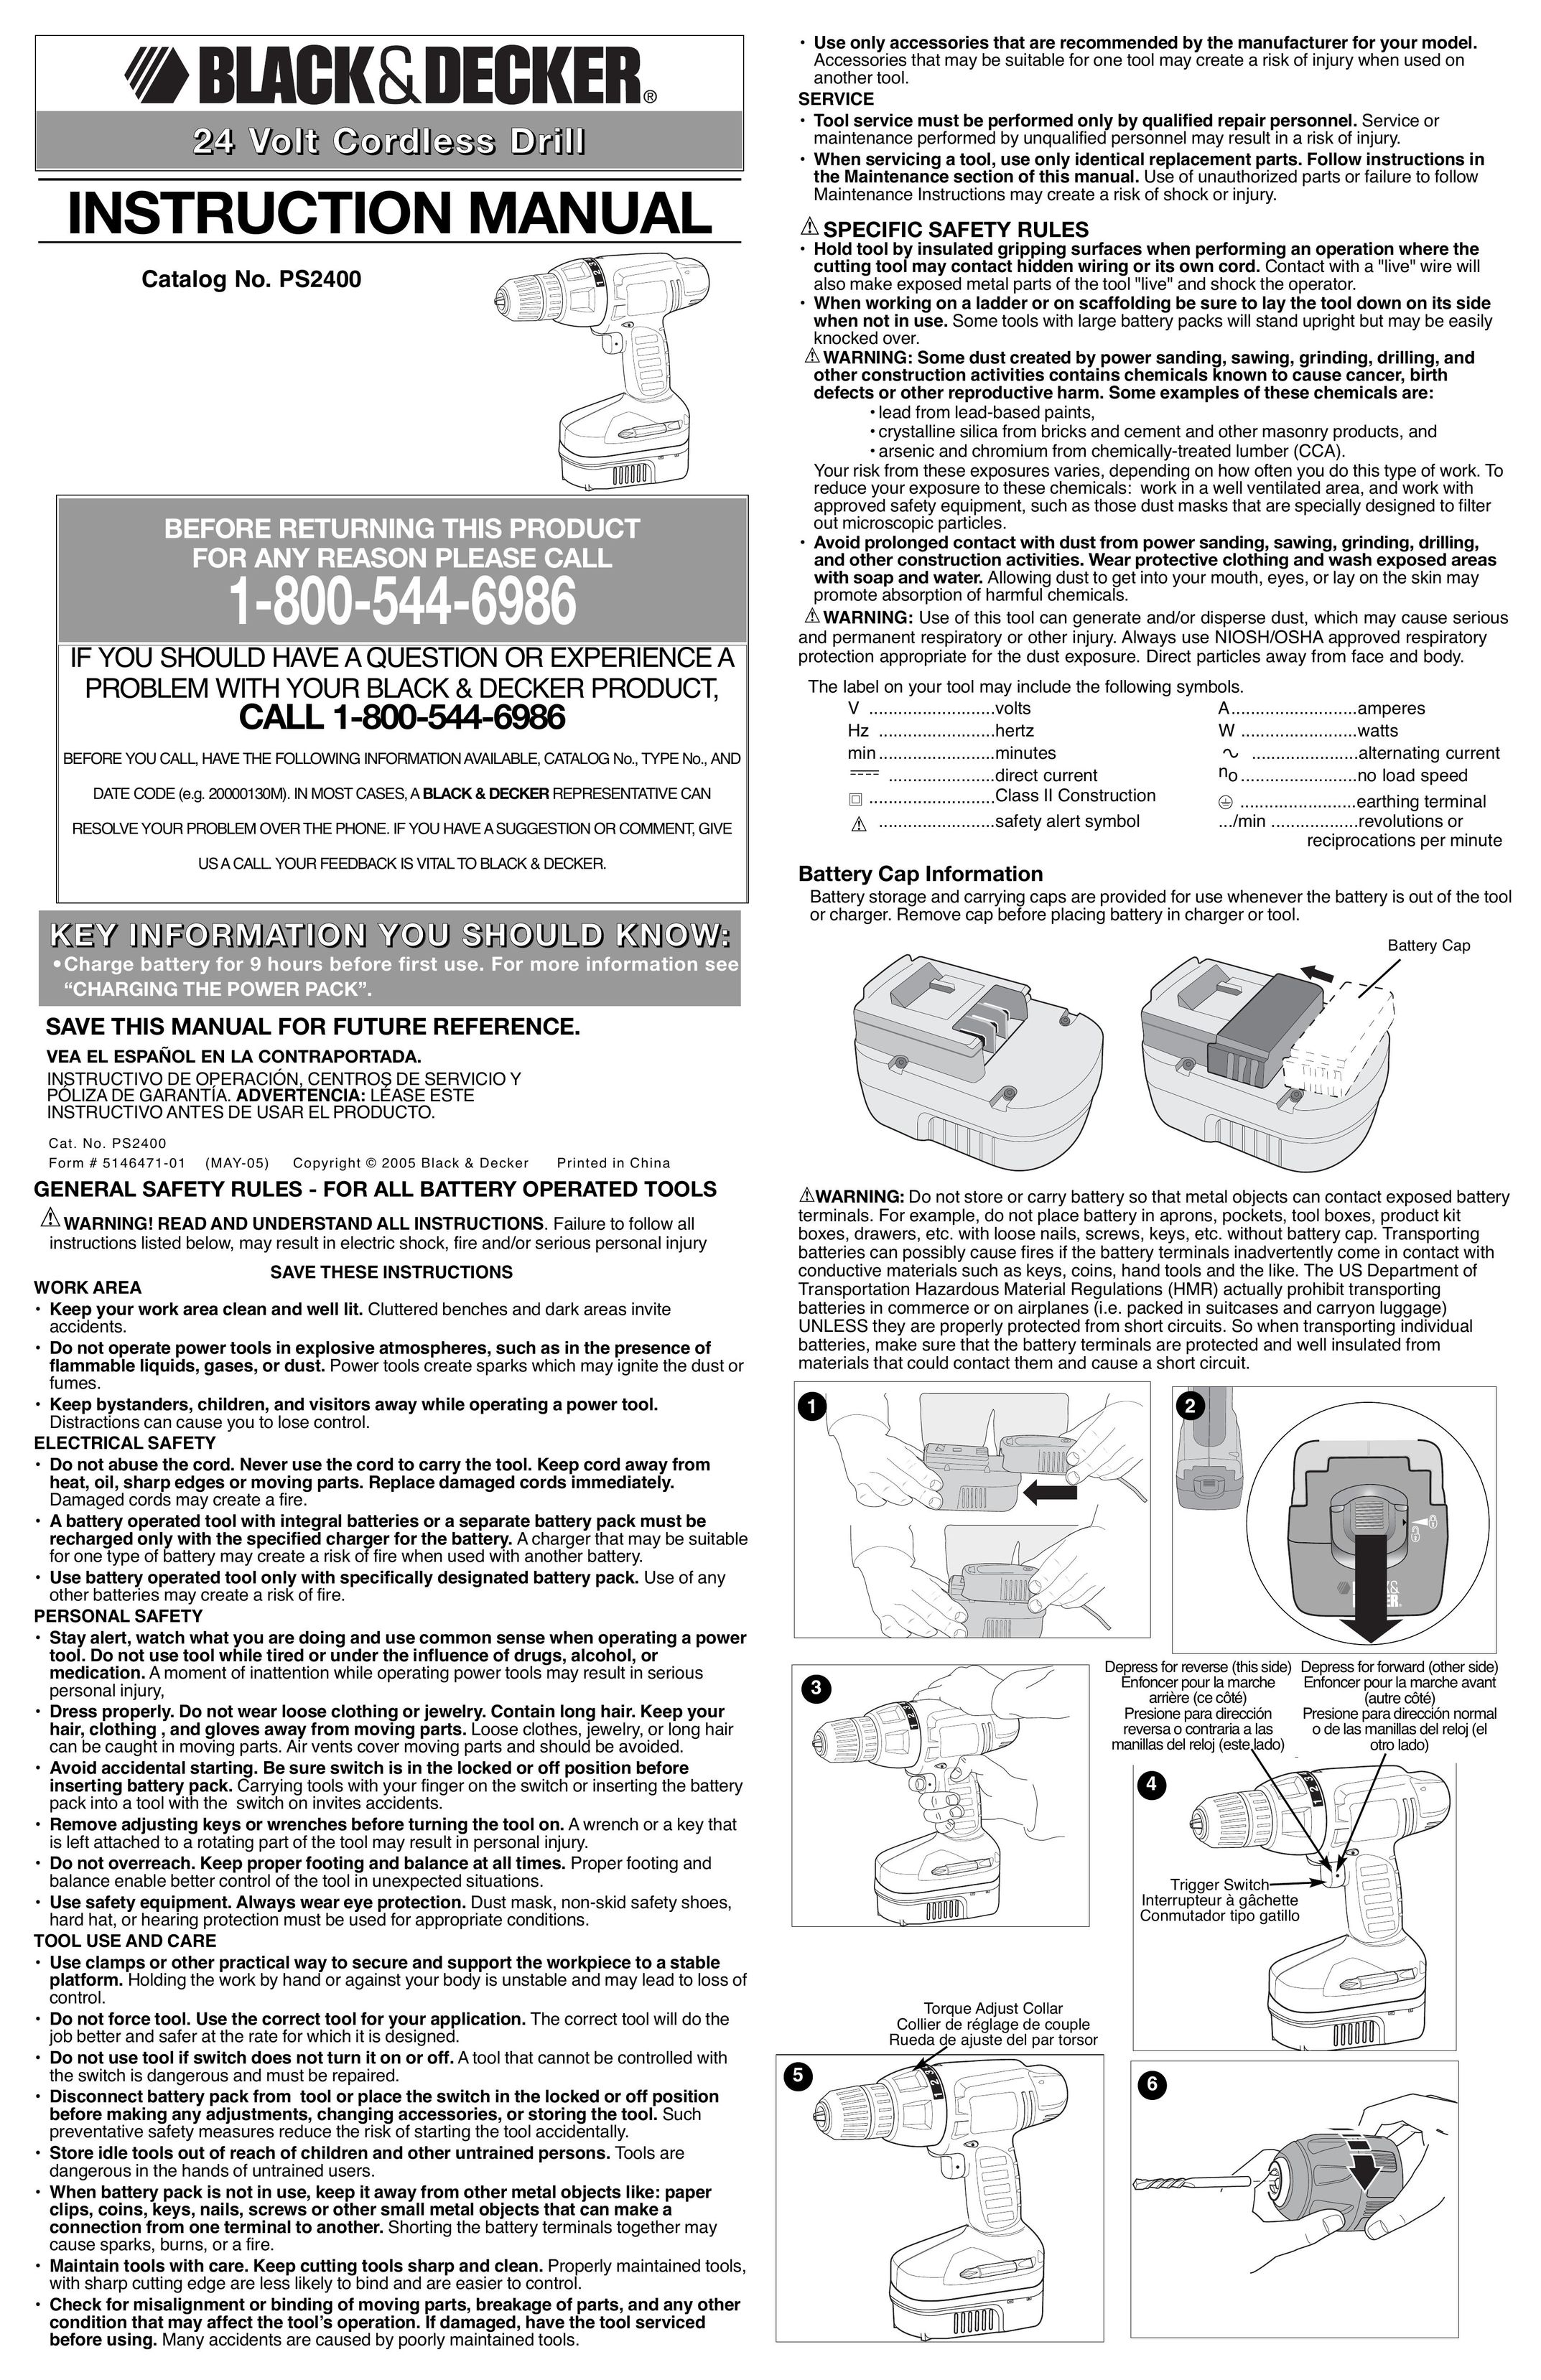 Black & Decker 5146471-01 Cordless Drill User Manual